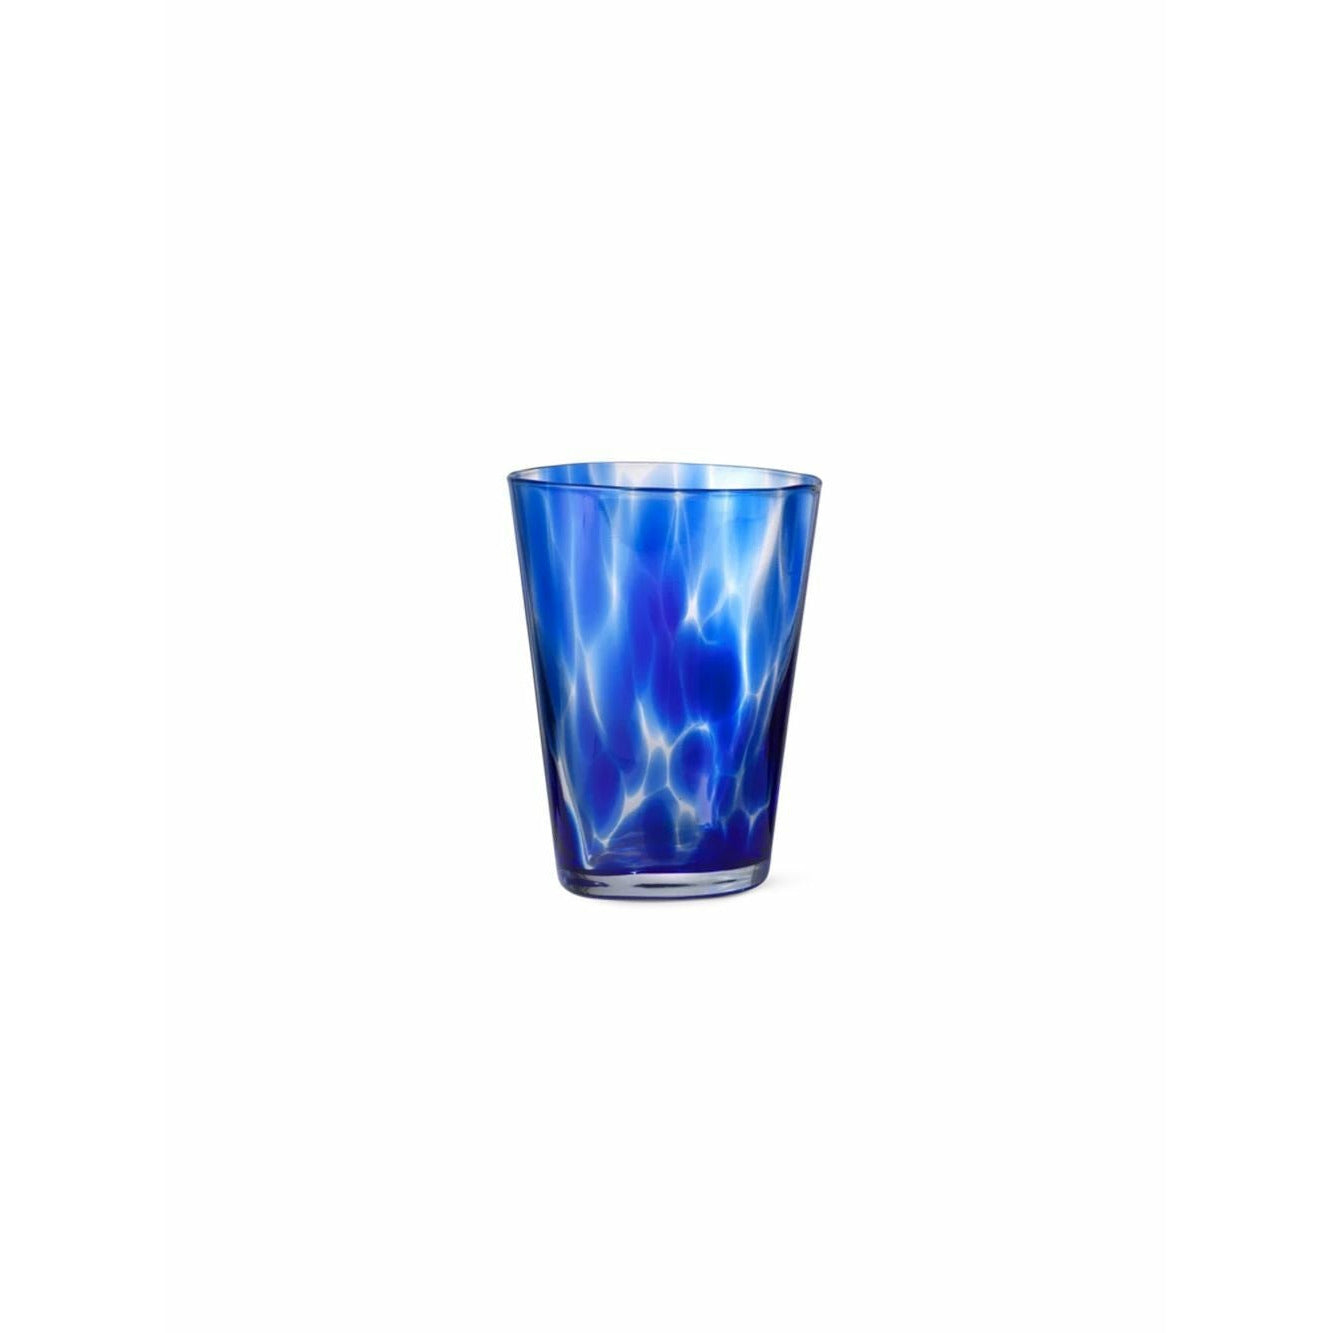 Ferm Living Casca Glas, Blå